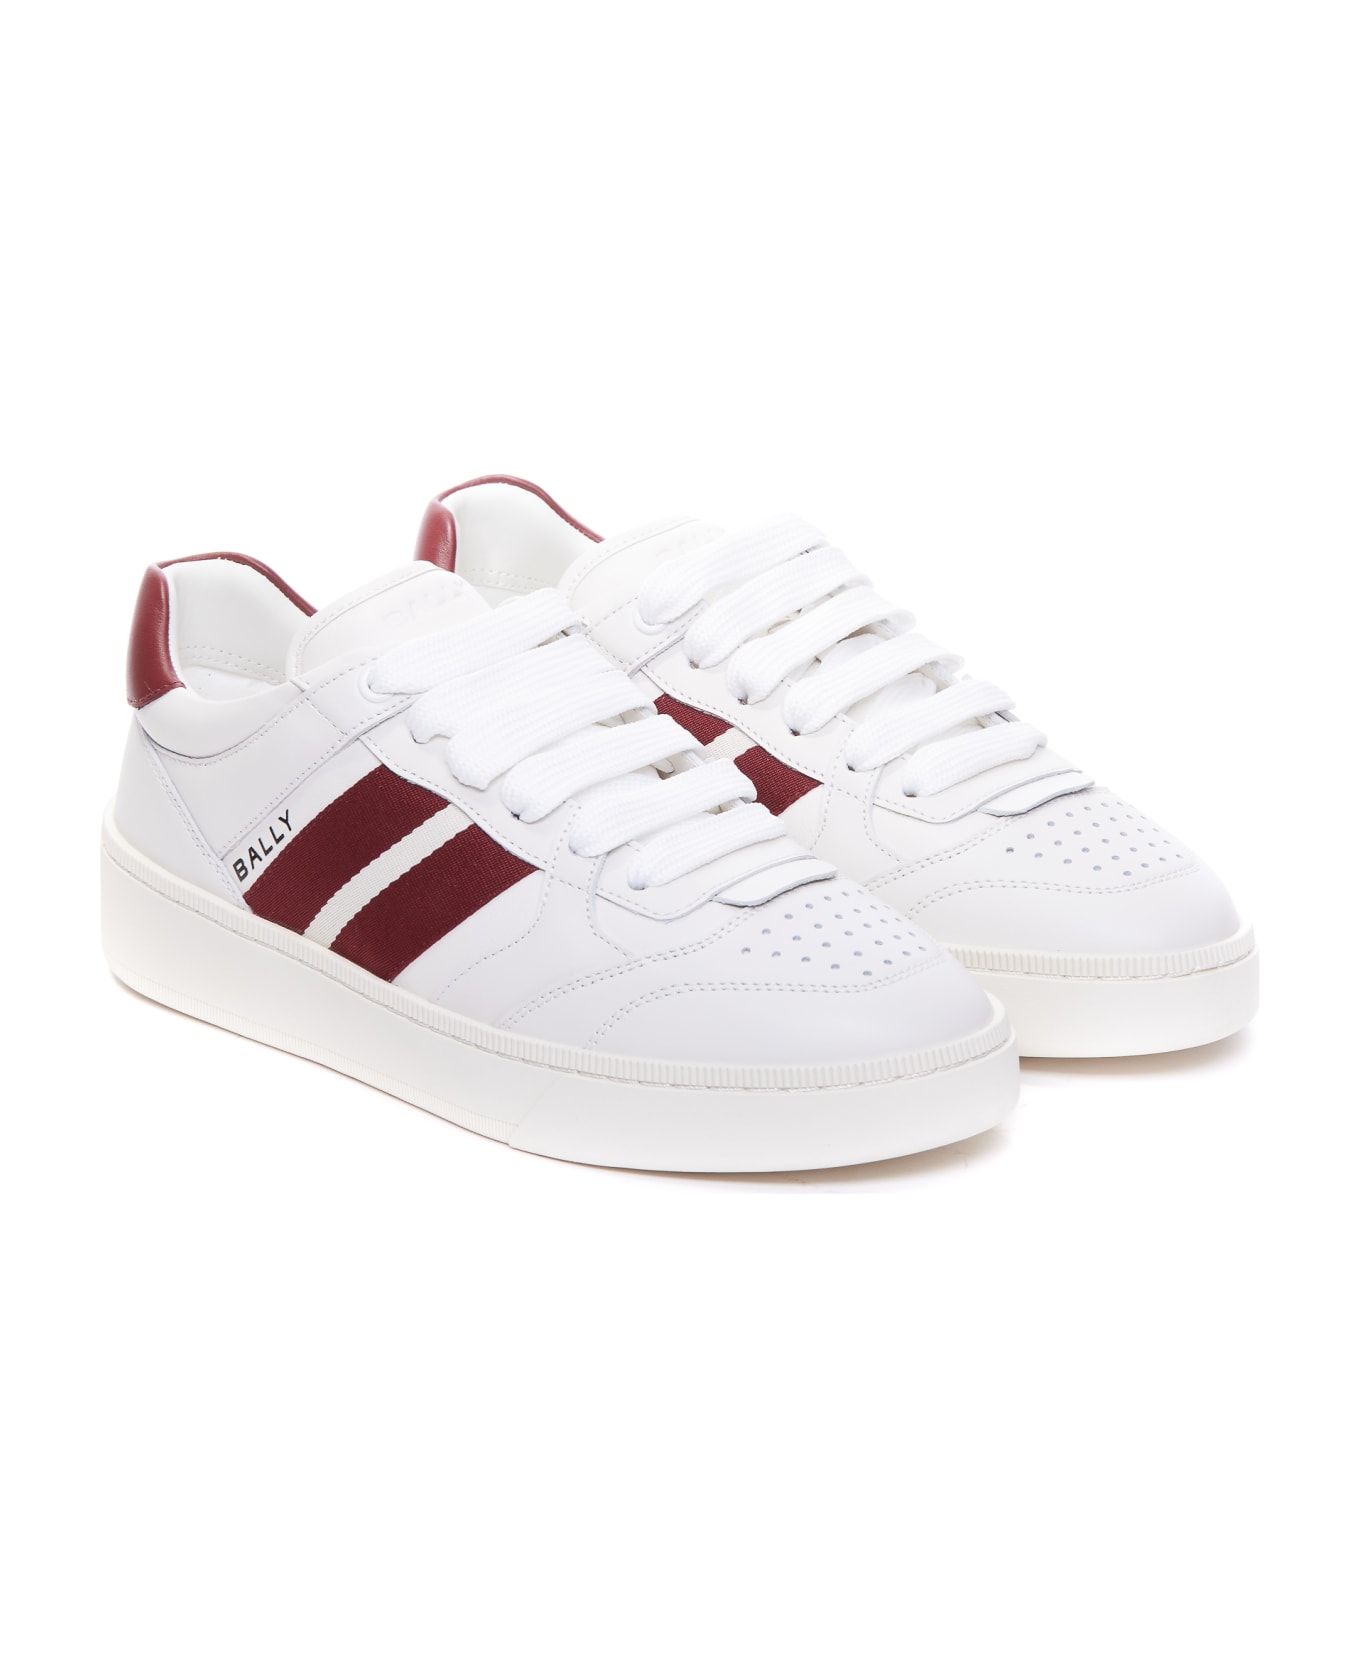 Bally Rebby Sneakers - WHITE/RED スニーカー